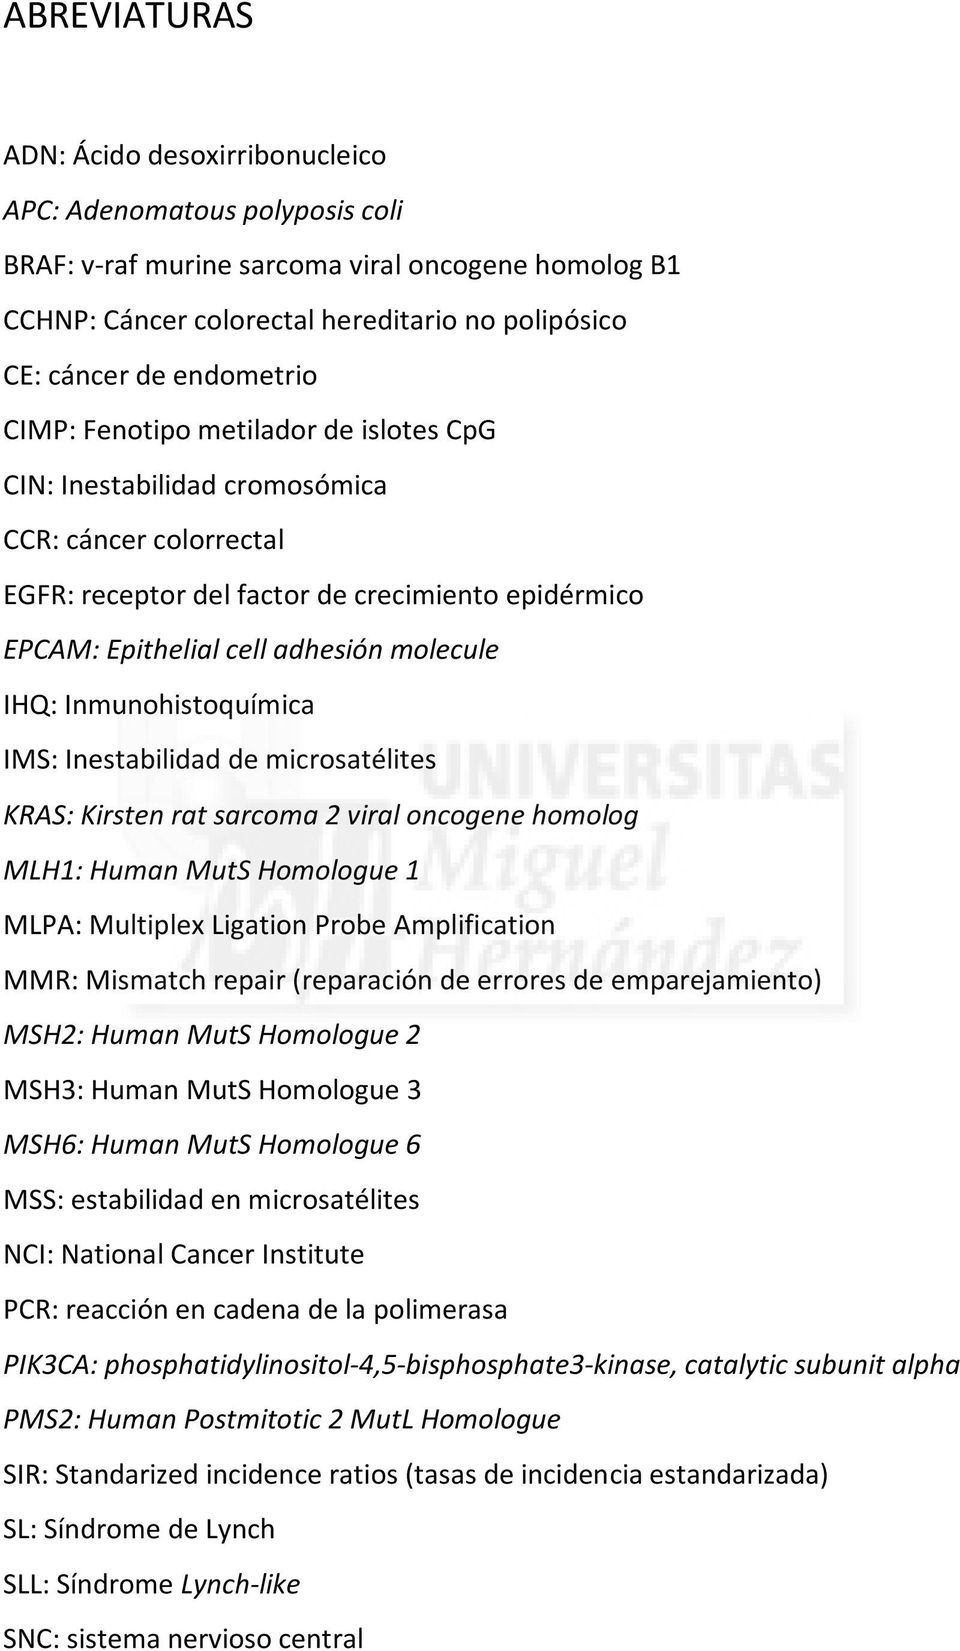 IHQ: Inmunohistoquímica IMS: Inestabilidad de microsatélites KRAS: Kirsten rat sarcoma 2 viral oncogene homolog MLH1: Human MutS Homologue 1 MLPA: Multiplex Ligation Probe Amplification MMR: Mismatch